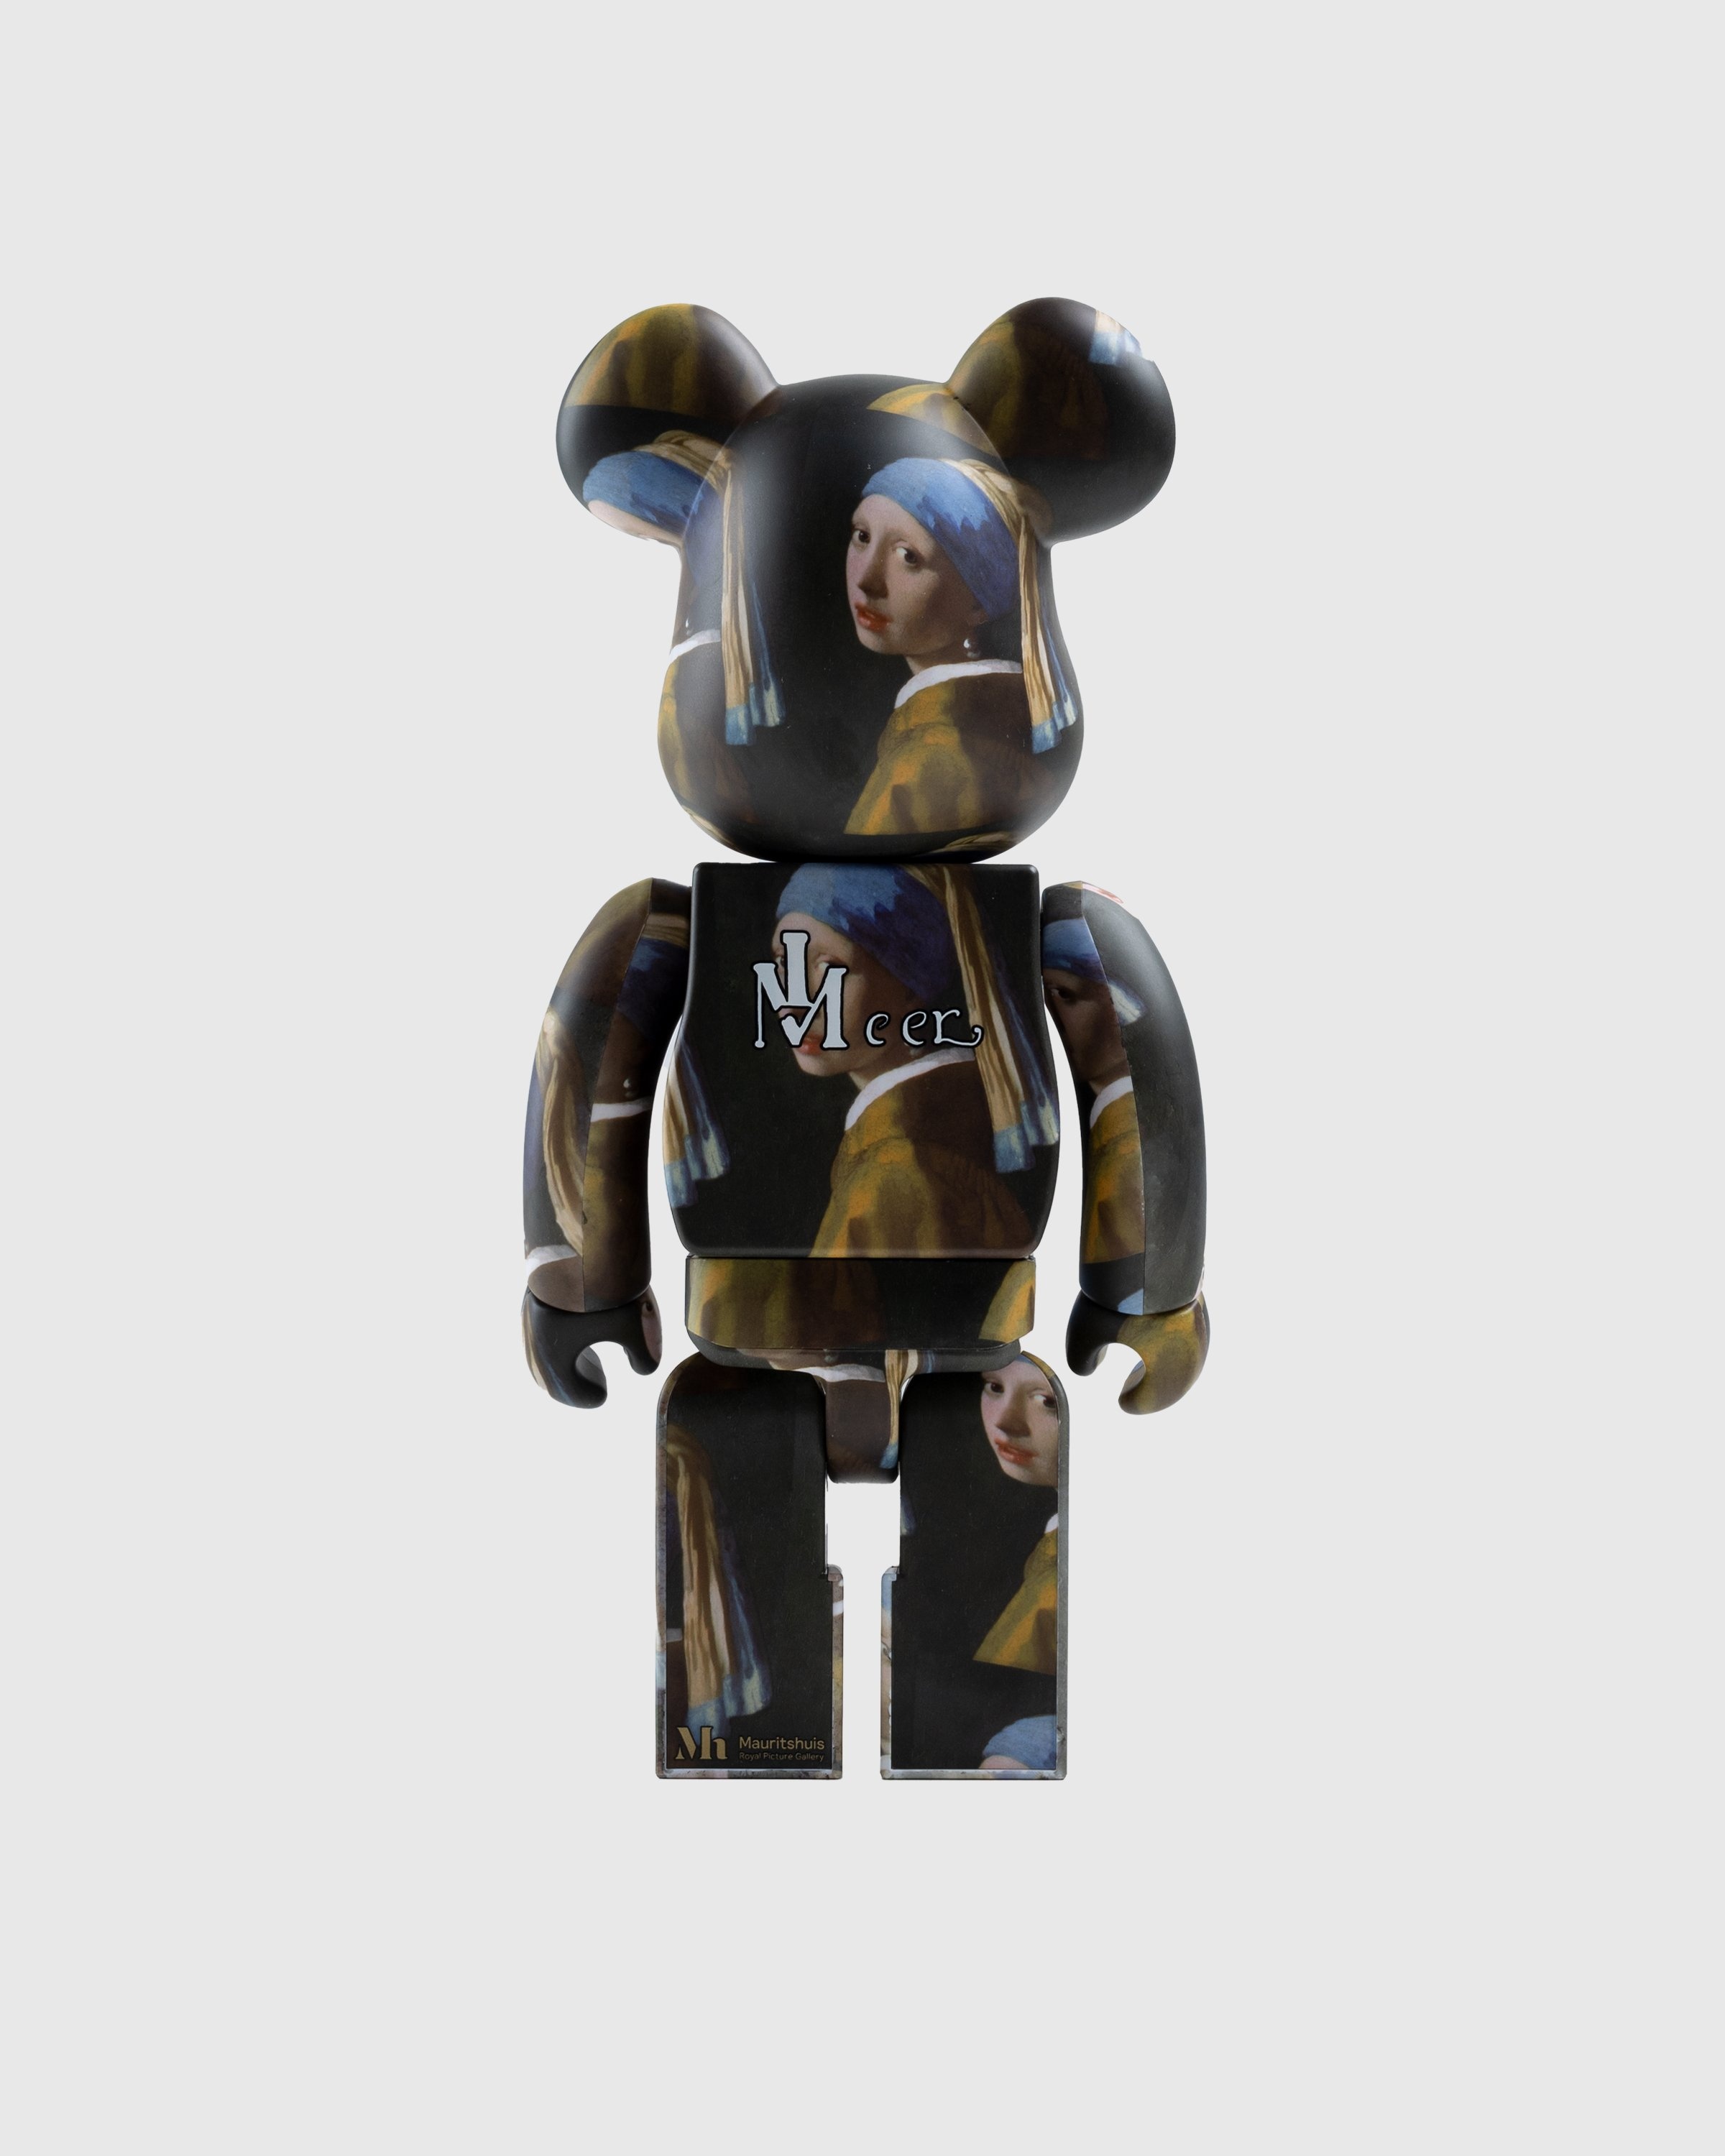 Bearbrick Johannes Vermeer (Girl with a Pearl Earring) 1000% - US